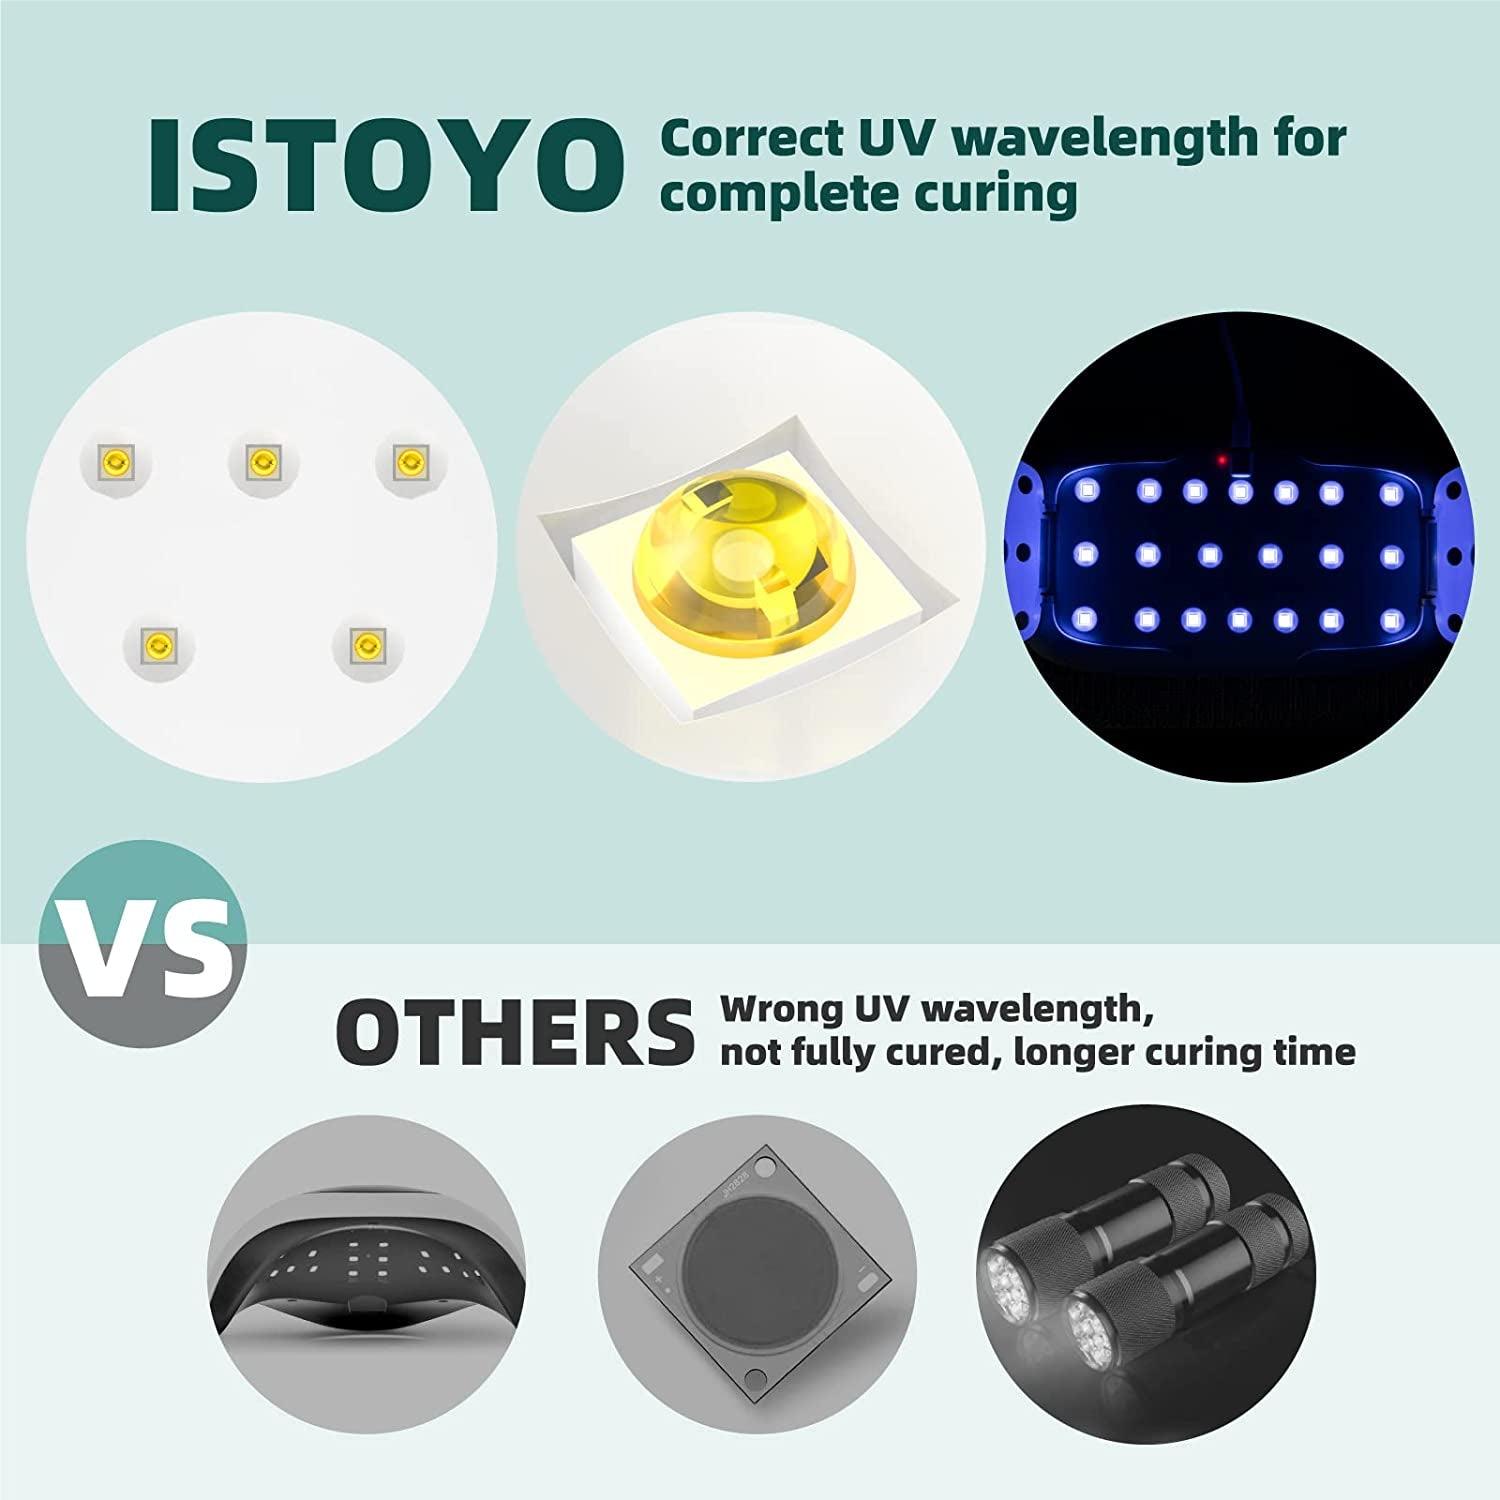 LET'S RESIN UV Light Advanced,Two-Sided Longer time Setting(2m,3m,5m) UV  Resin Light with 36 LED Beads, Large Size UV Lamp for Resin Curing,Resin